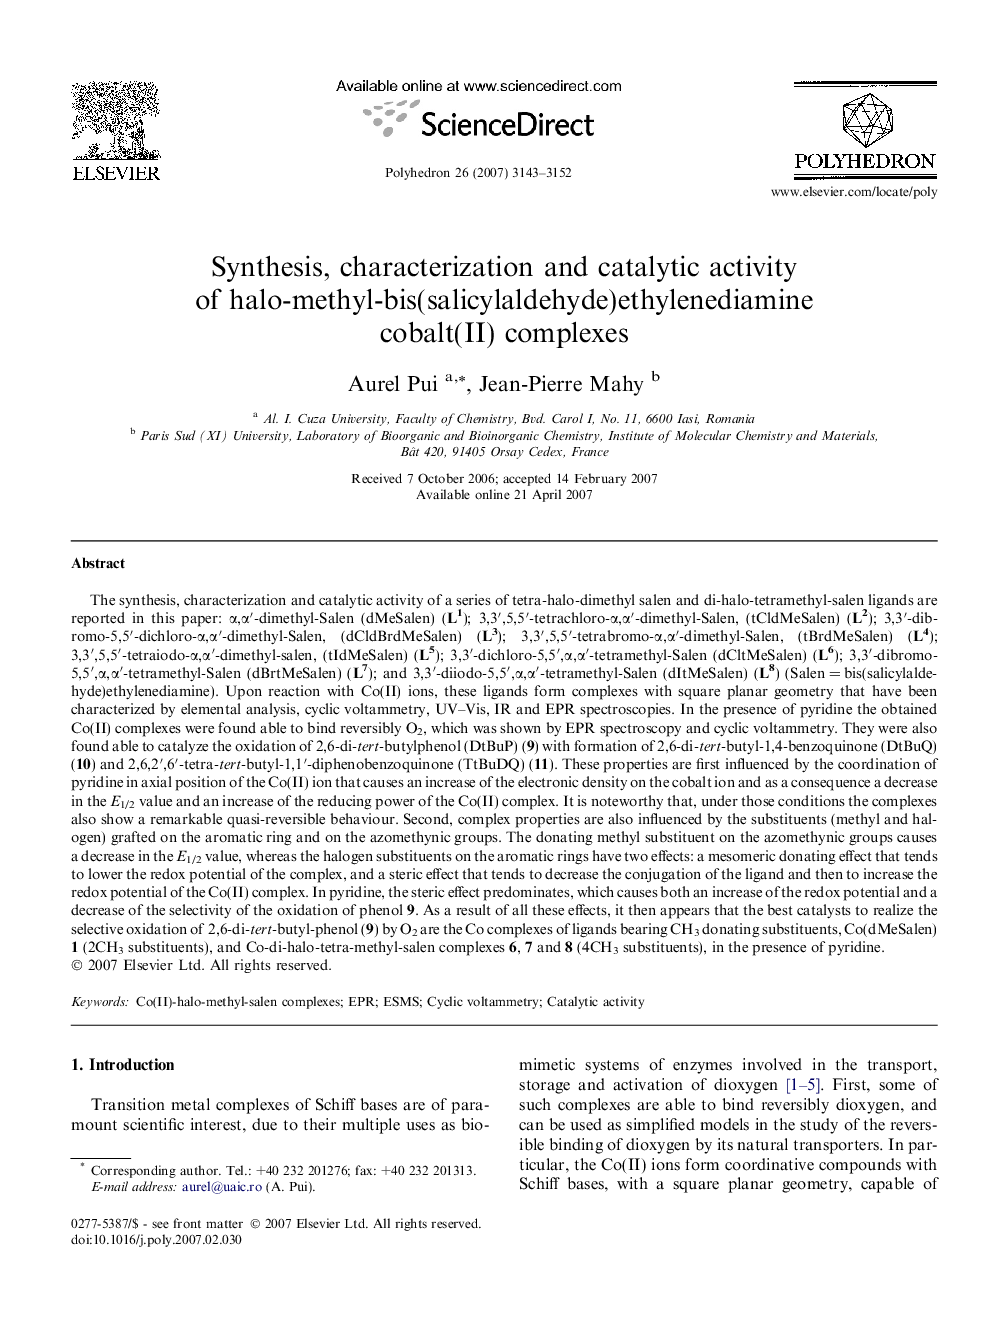 Synthesis, characterization and catalytic activity of halo-methyl-bis(salicylaldehyde)ethylenediamine cobalt(II) complexes